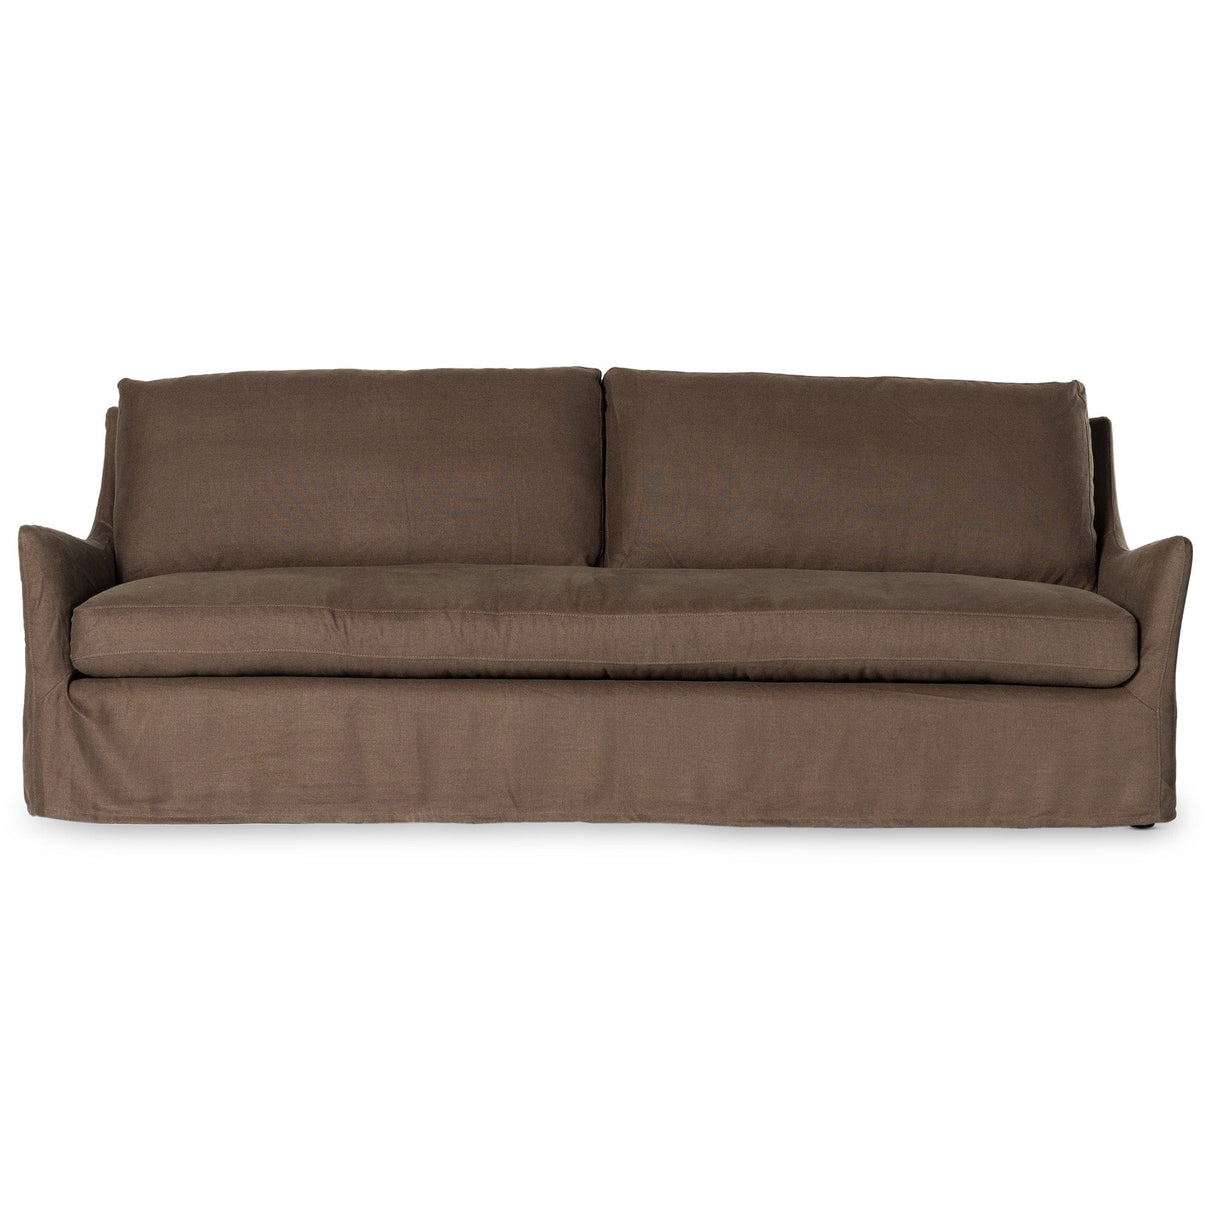 Four Hands Monette Slipcover Sofa Furniture four-hands-238680-002 801542158507